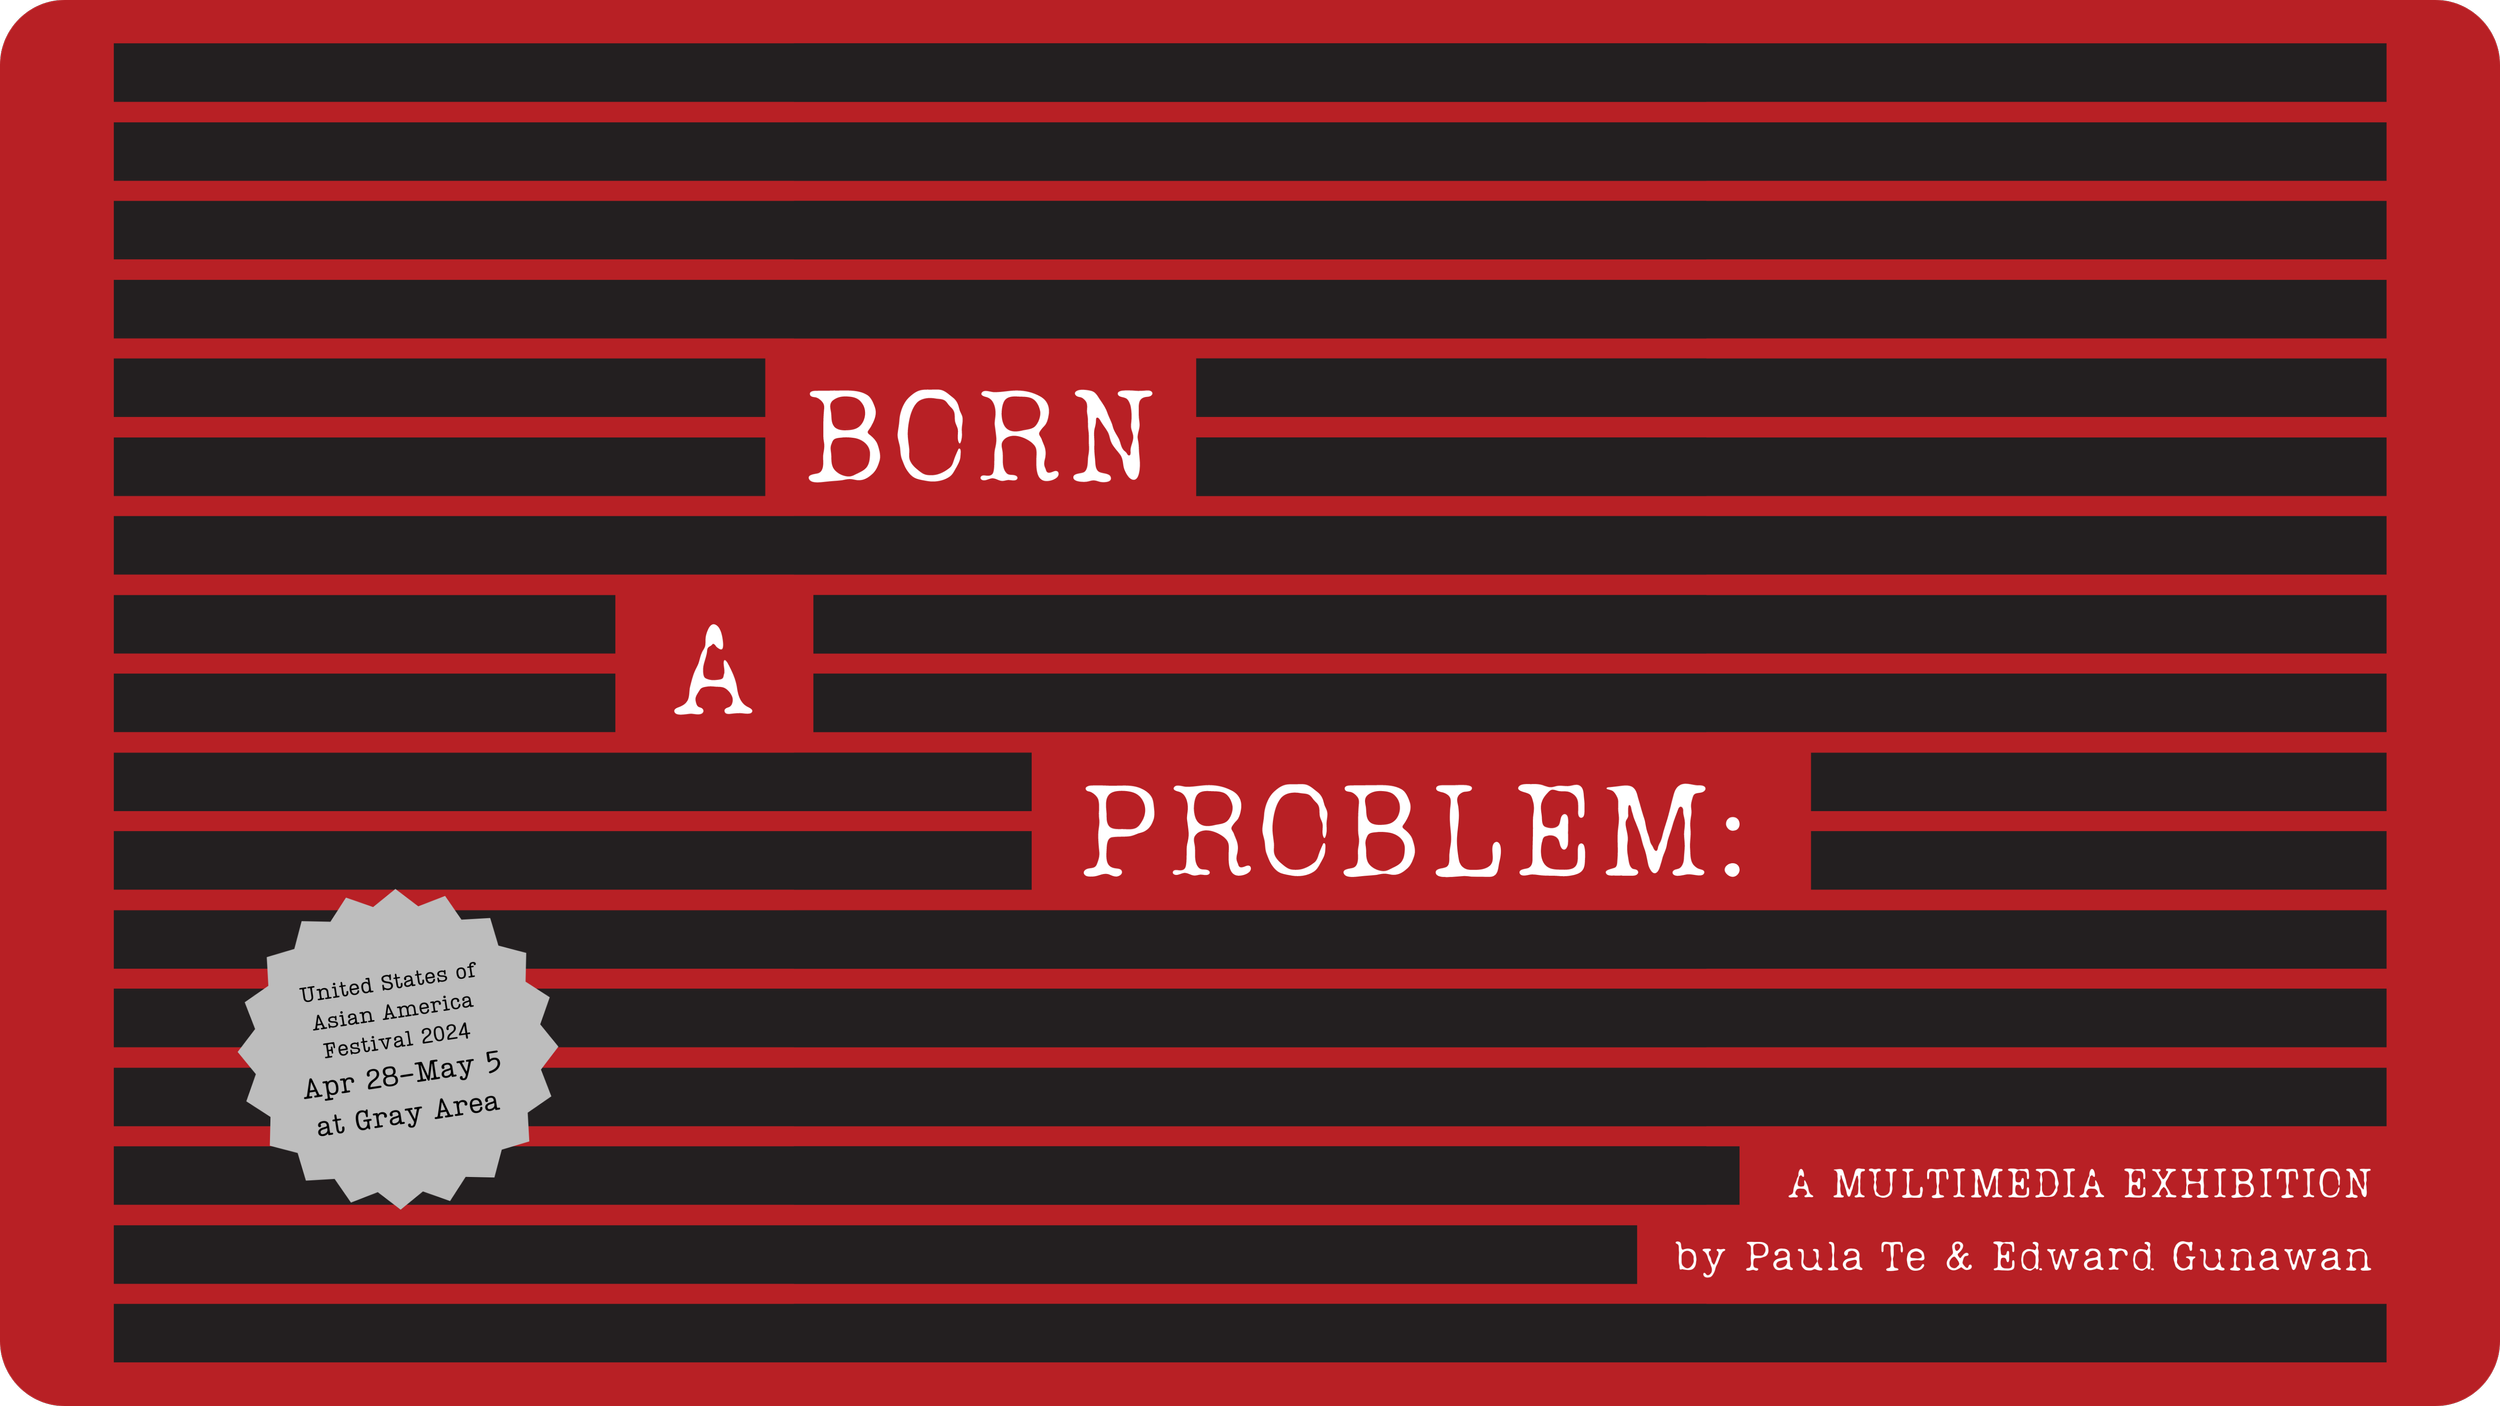 BORN A PROBLEM